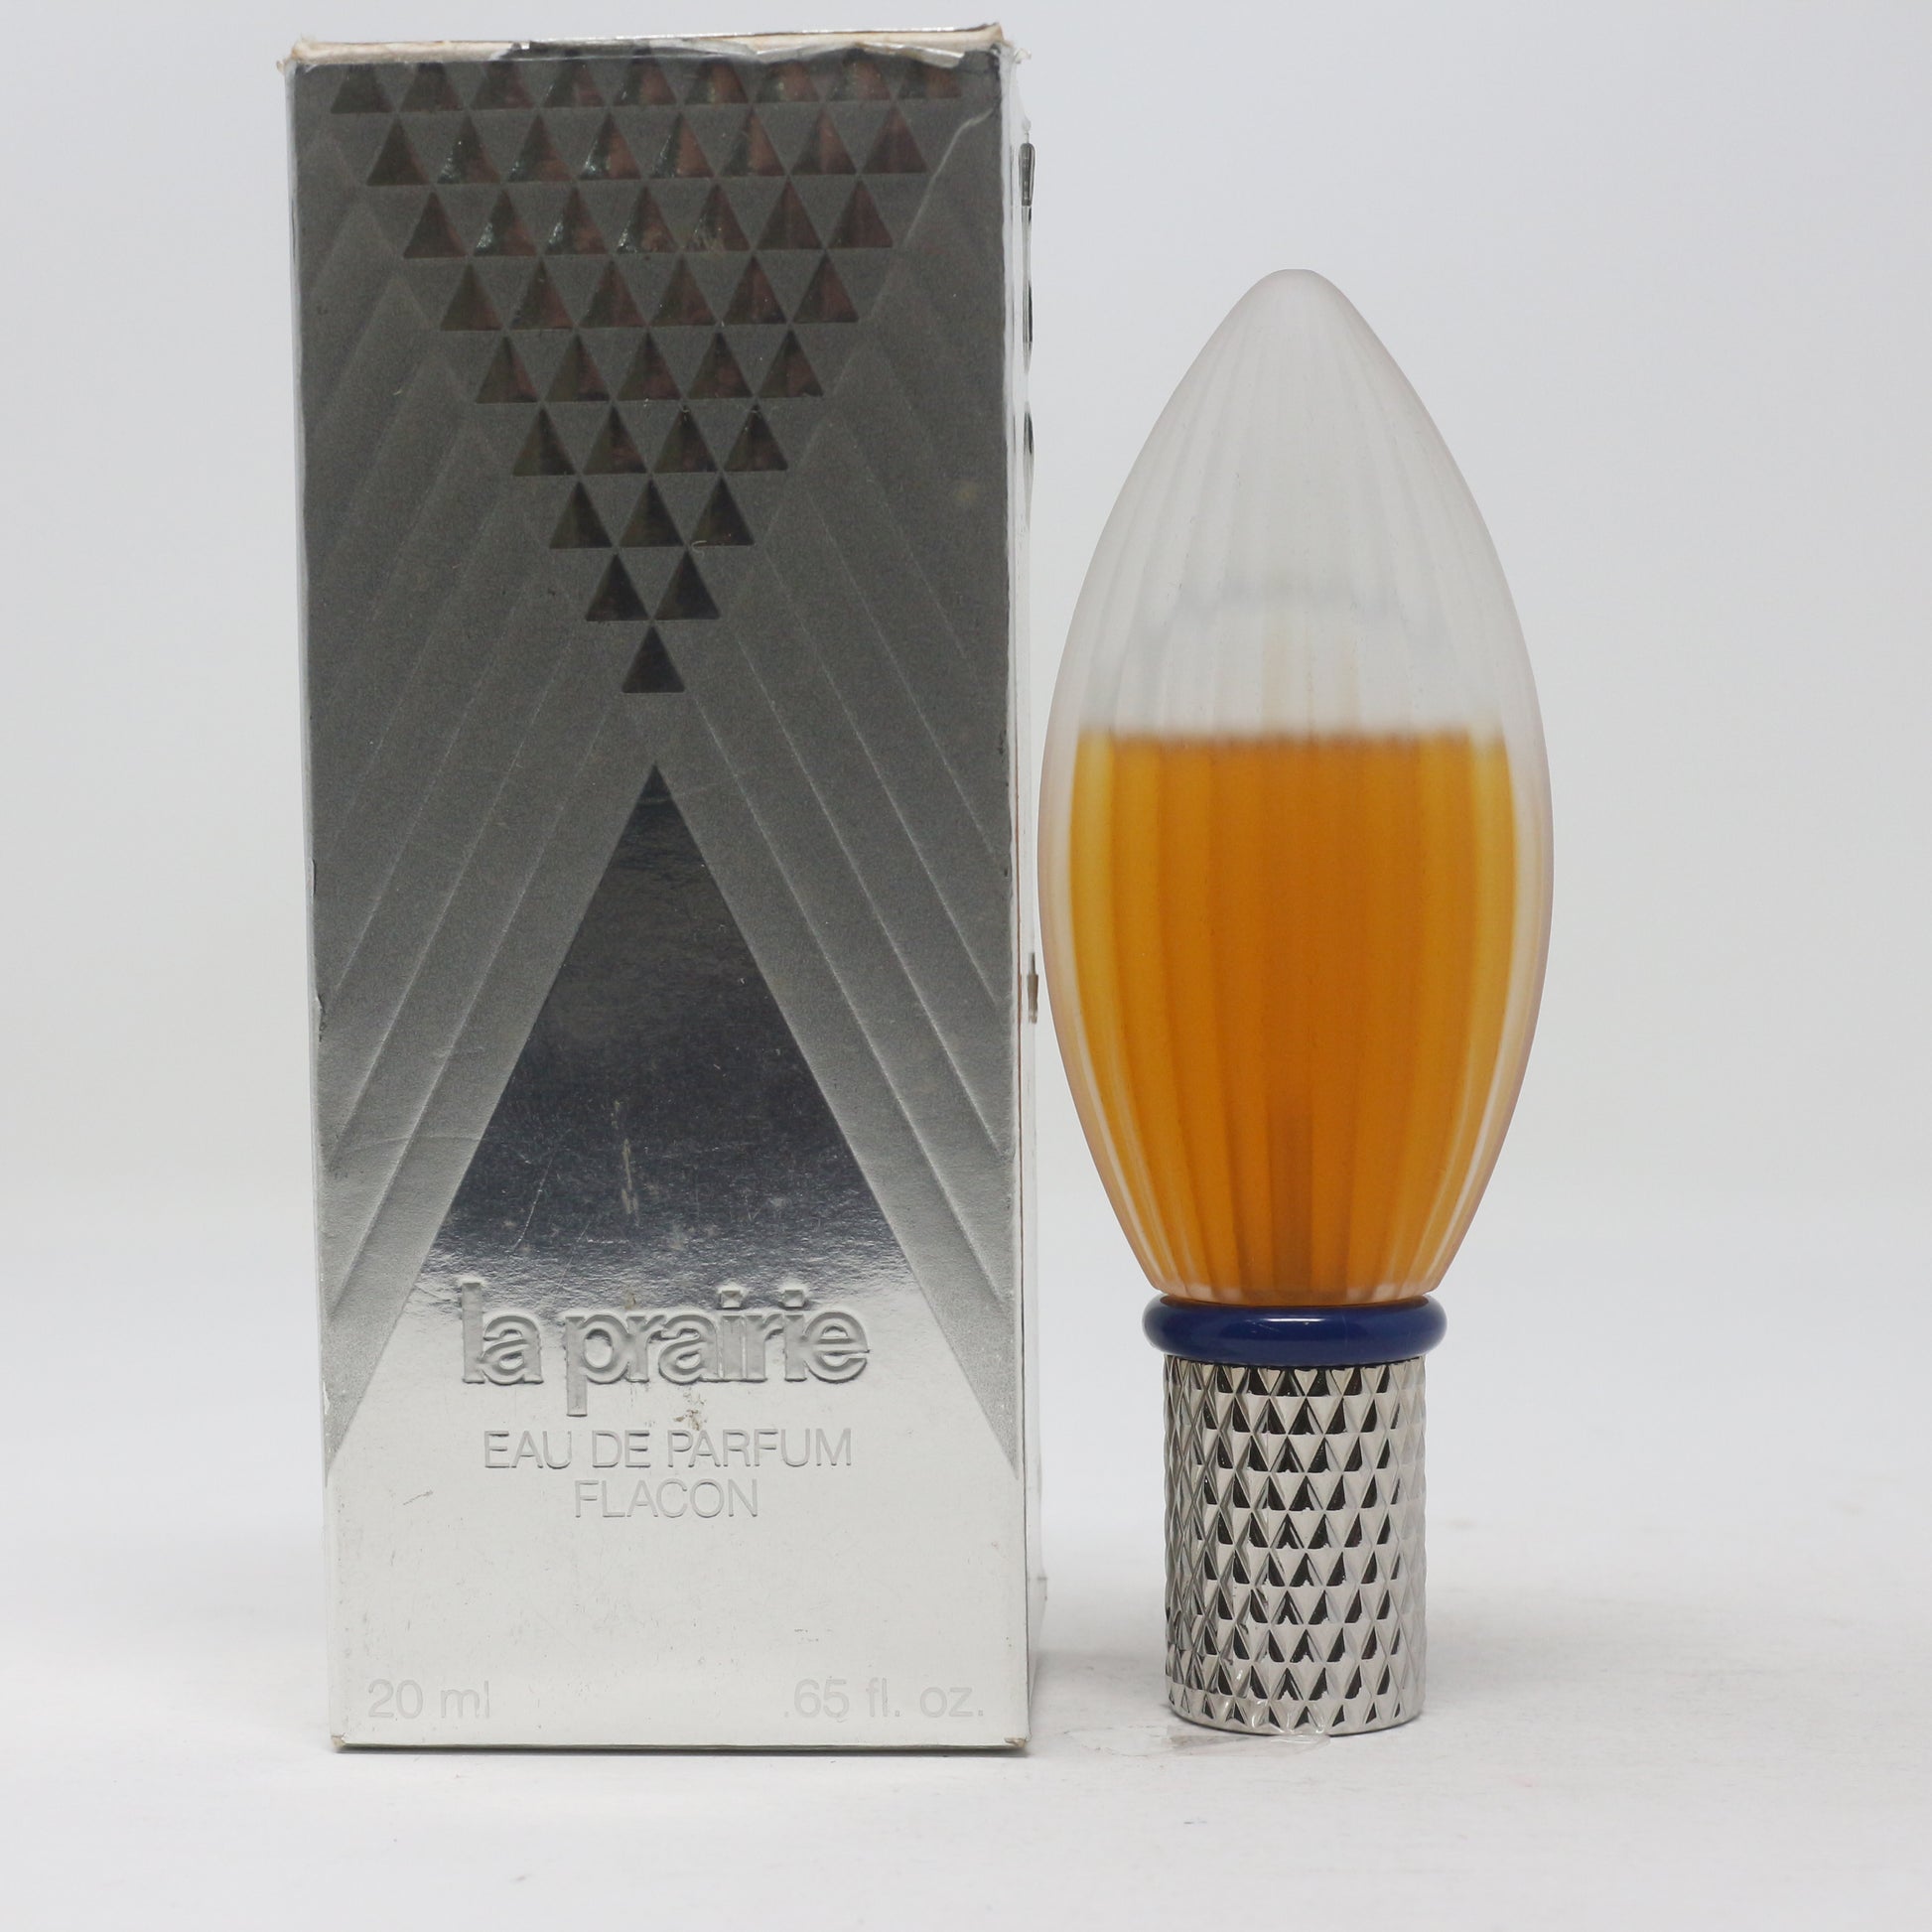 La Prairie Eau De Parfum Flacon (Original Formula) 20 mL